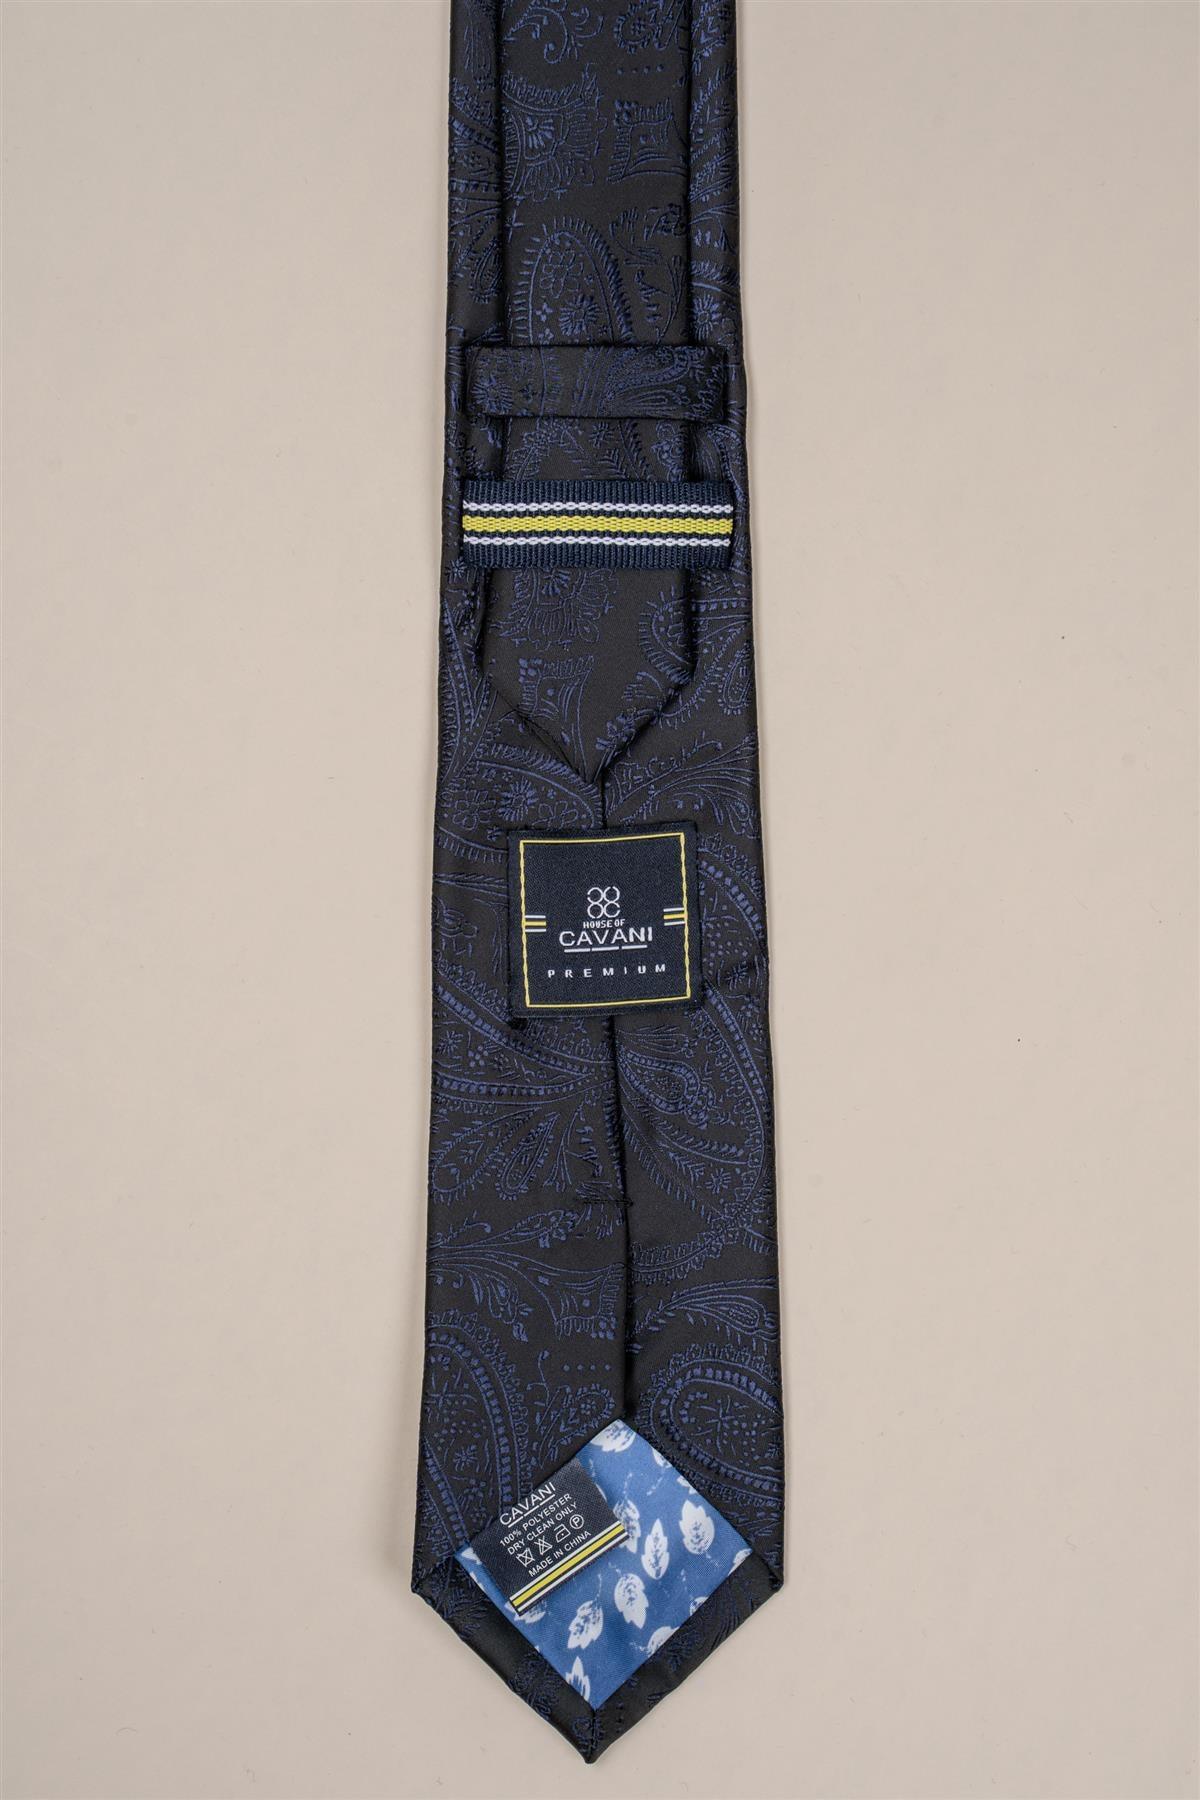 CV813 patterned tie